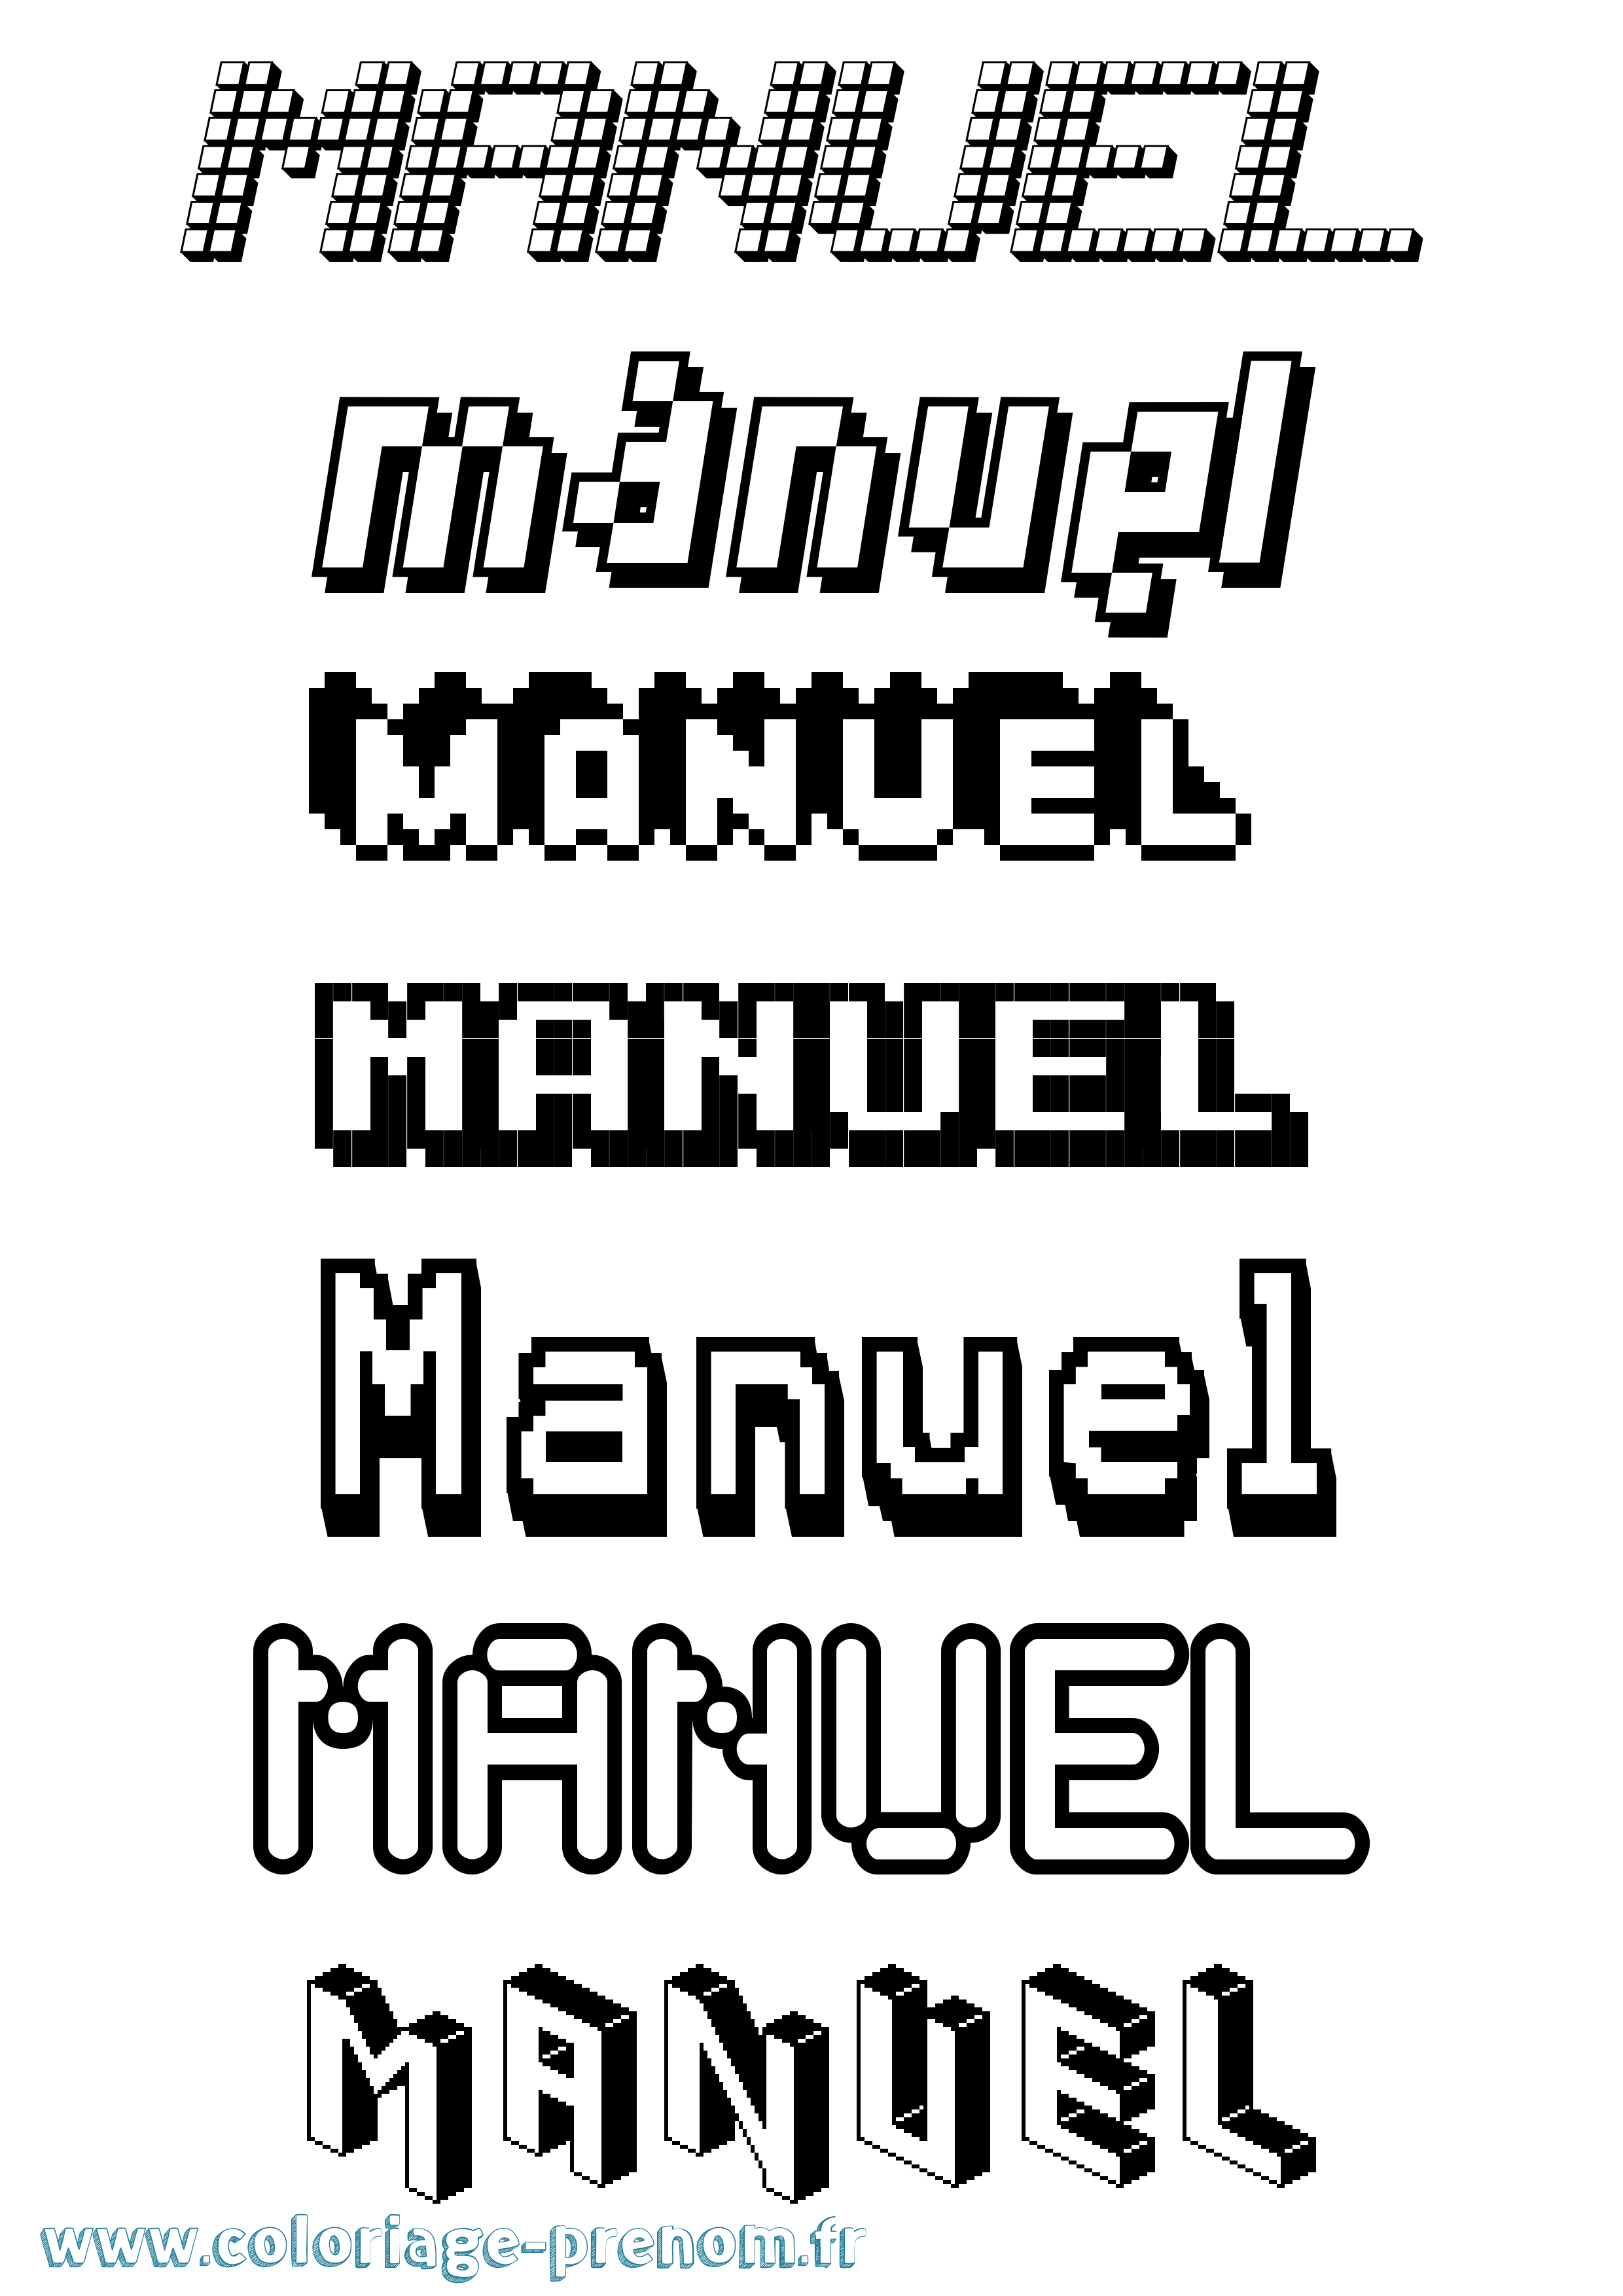 Coloriage prénom Manuel Pixel